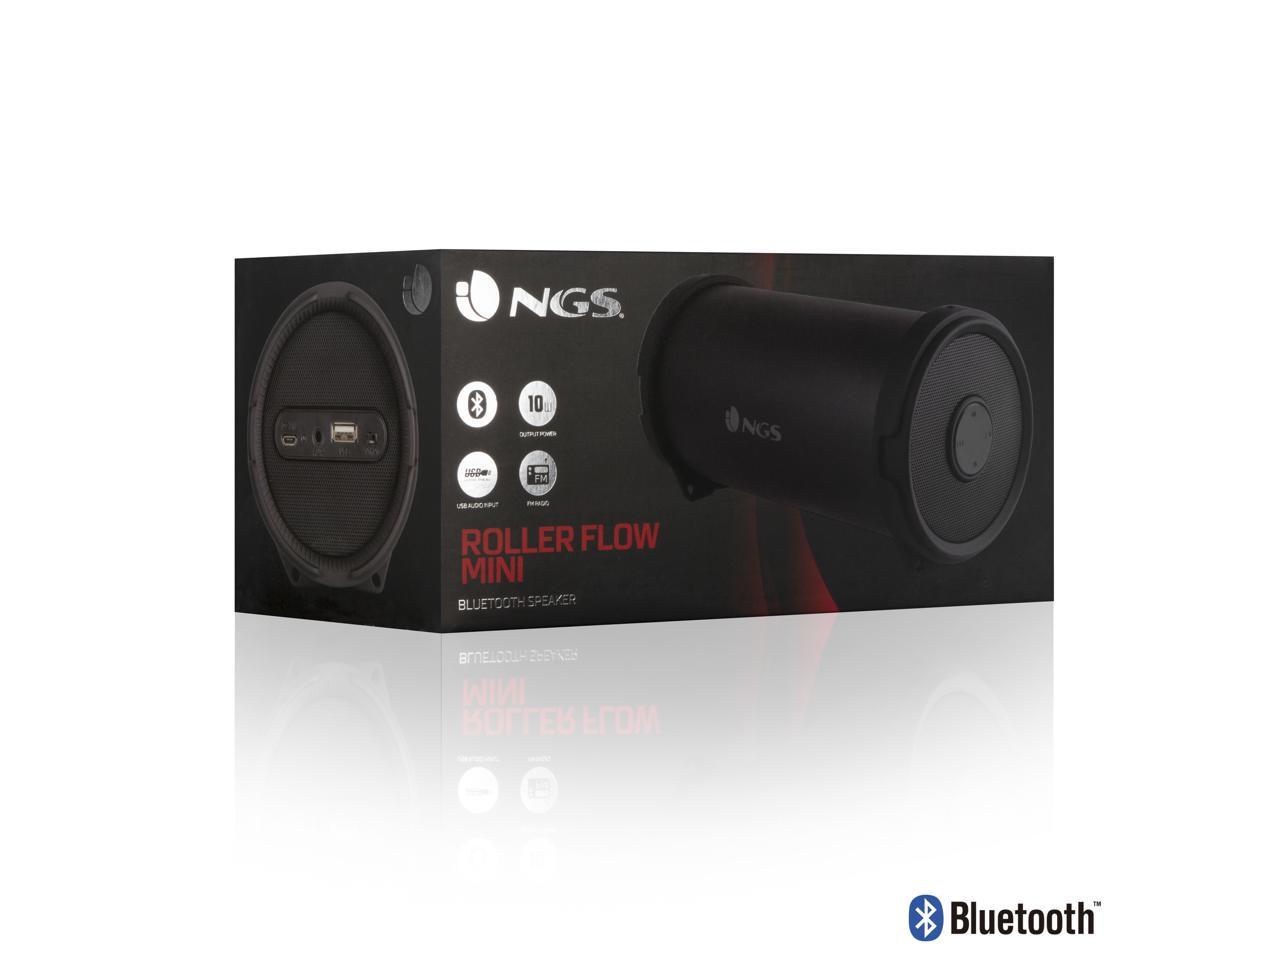 NGS Roller Flow Mini 10W Bluetooth Speaker with FM Radio USB Port AUX Input Model ROLLERFLOWMINI